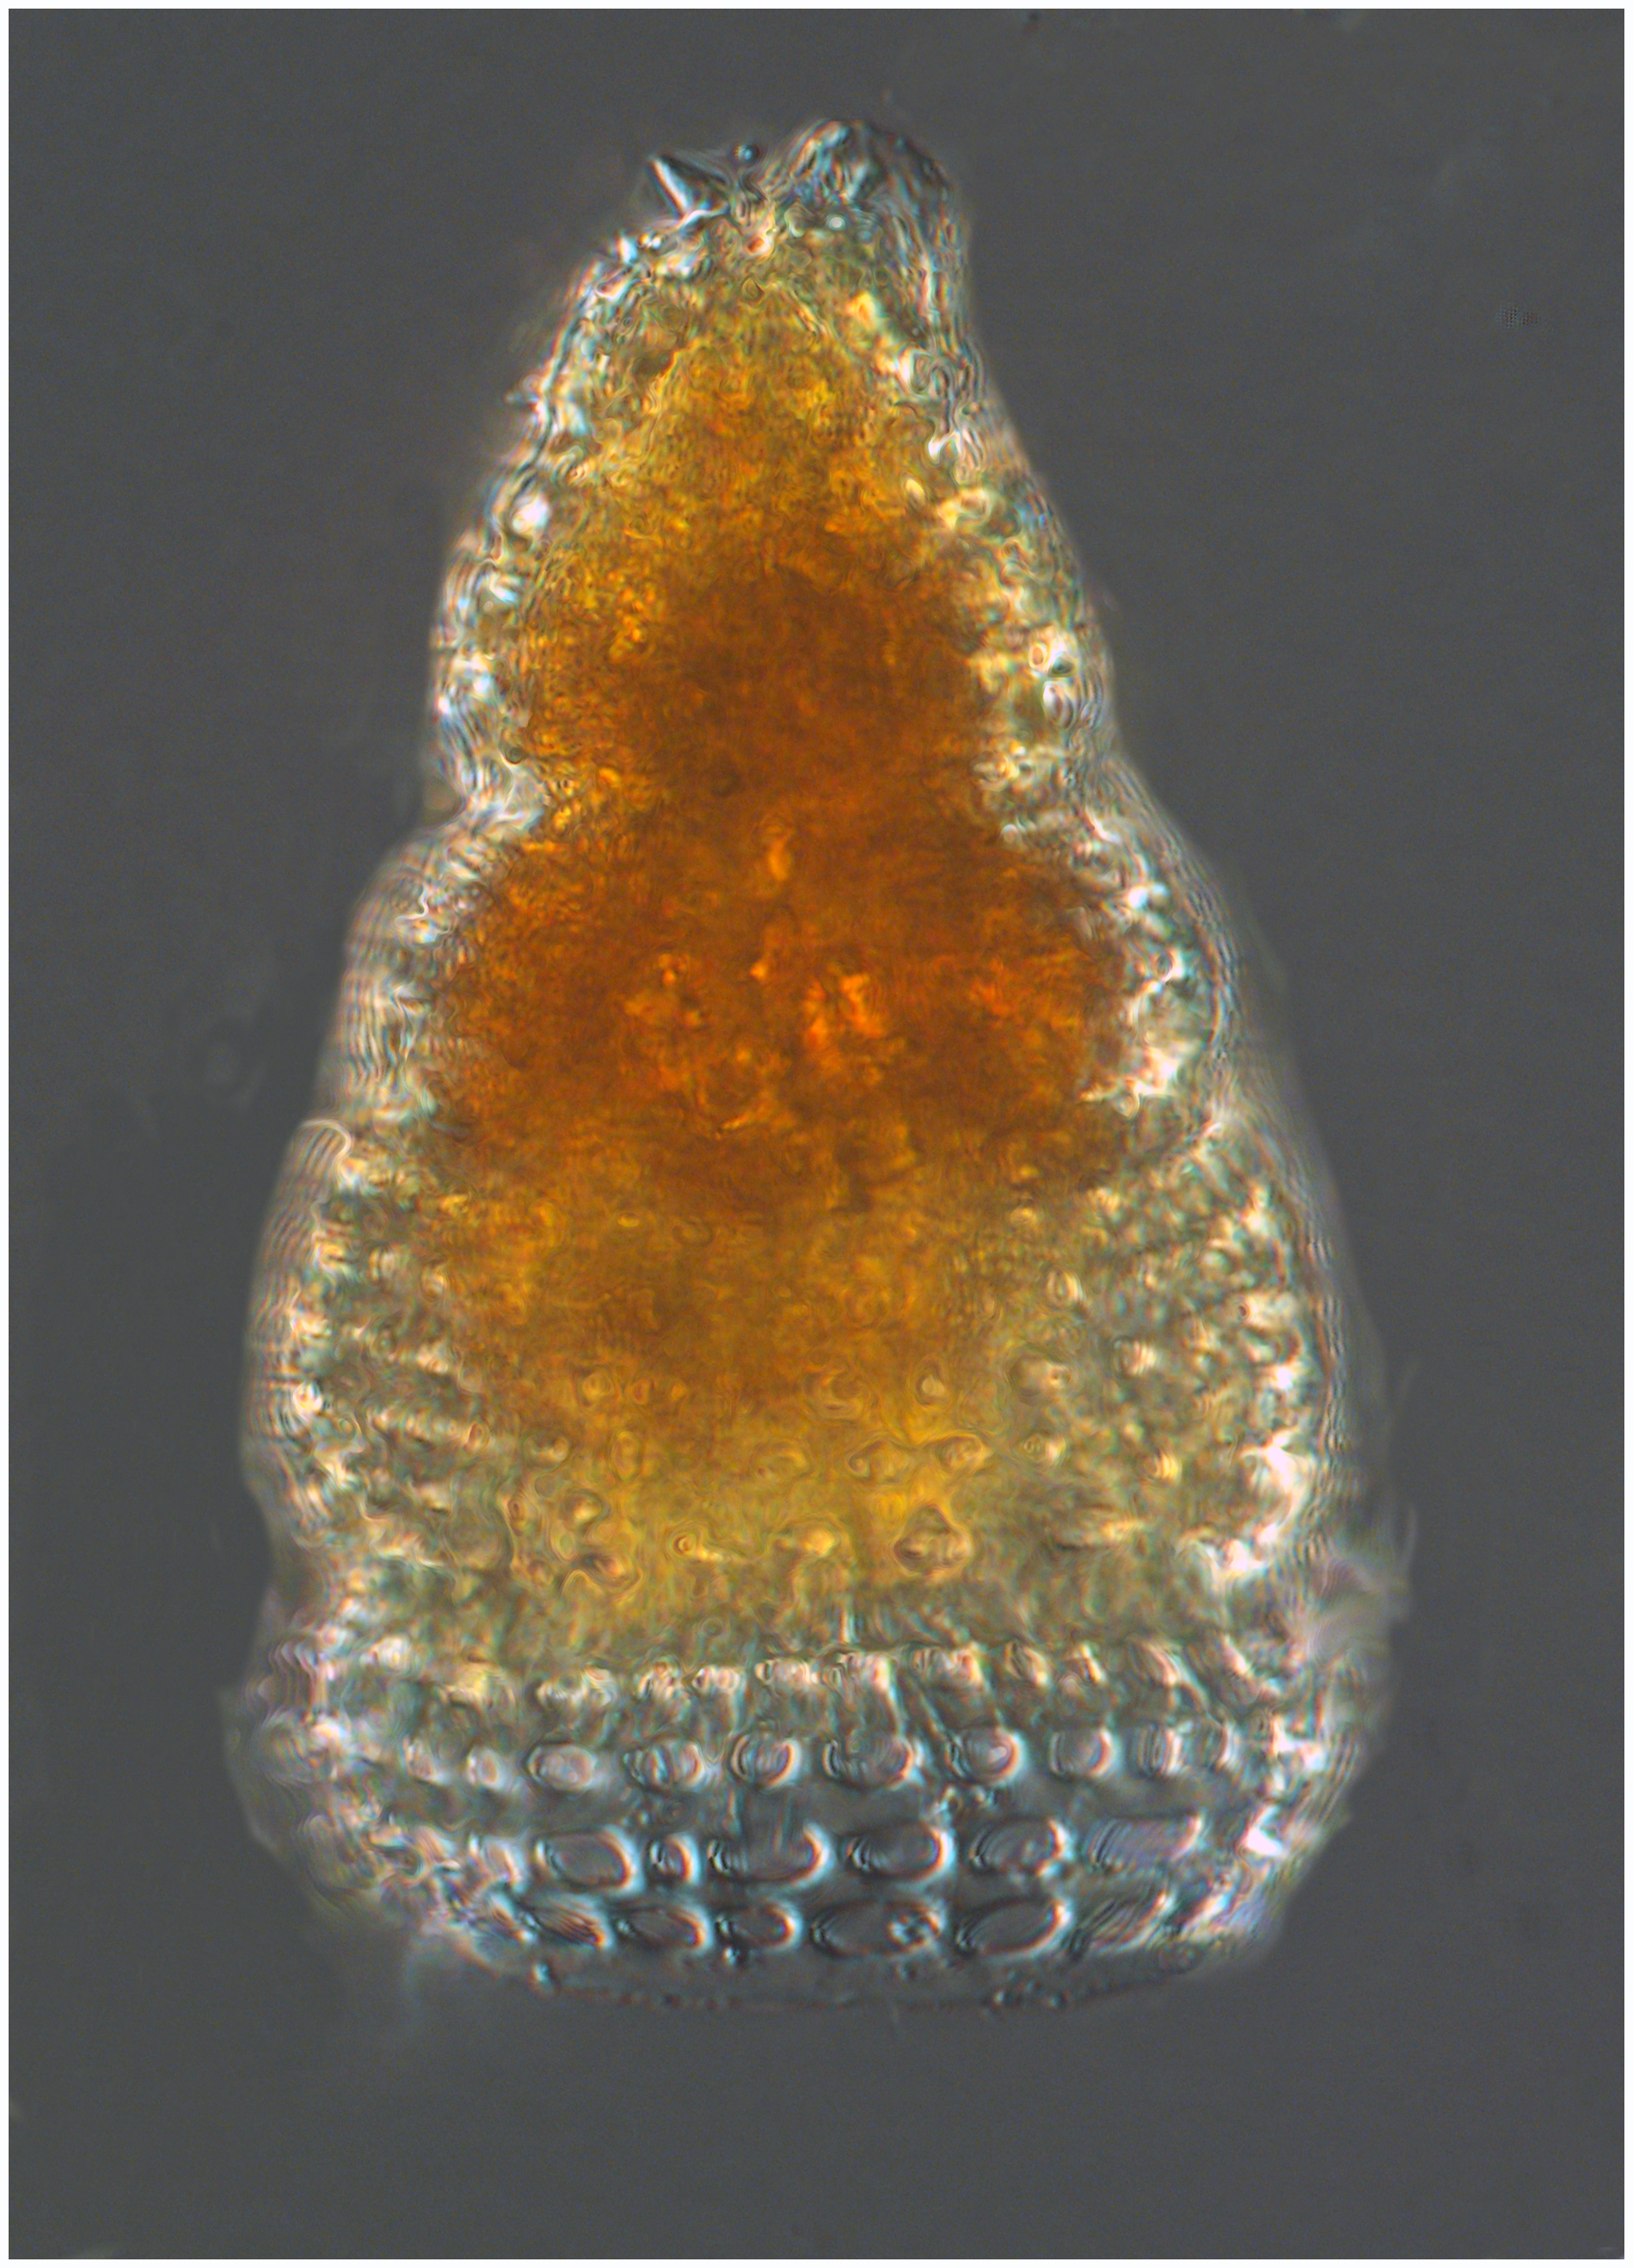 Spirocyrtis cornutella (Haeckel)